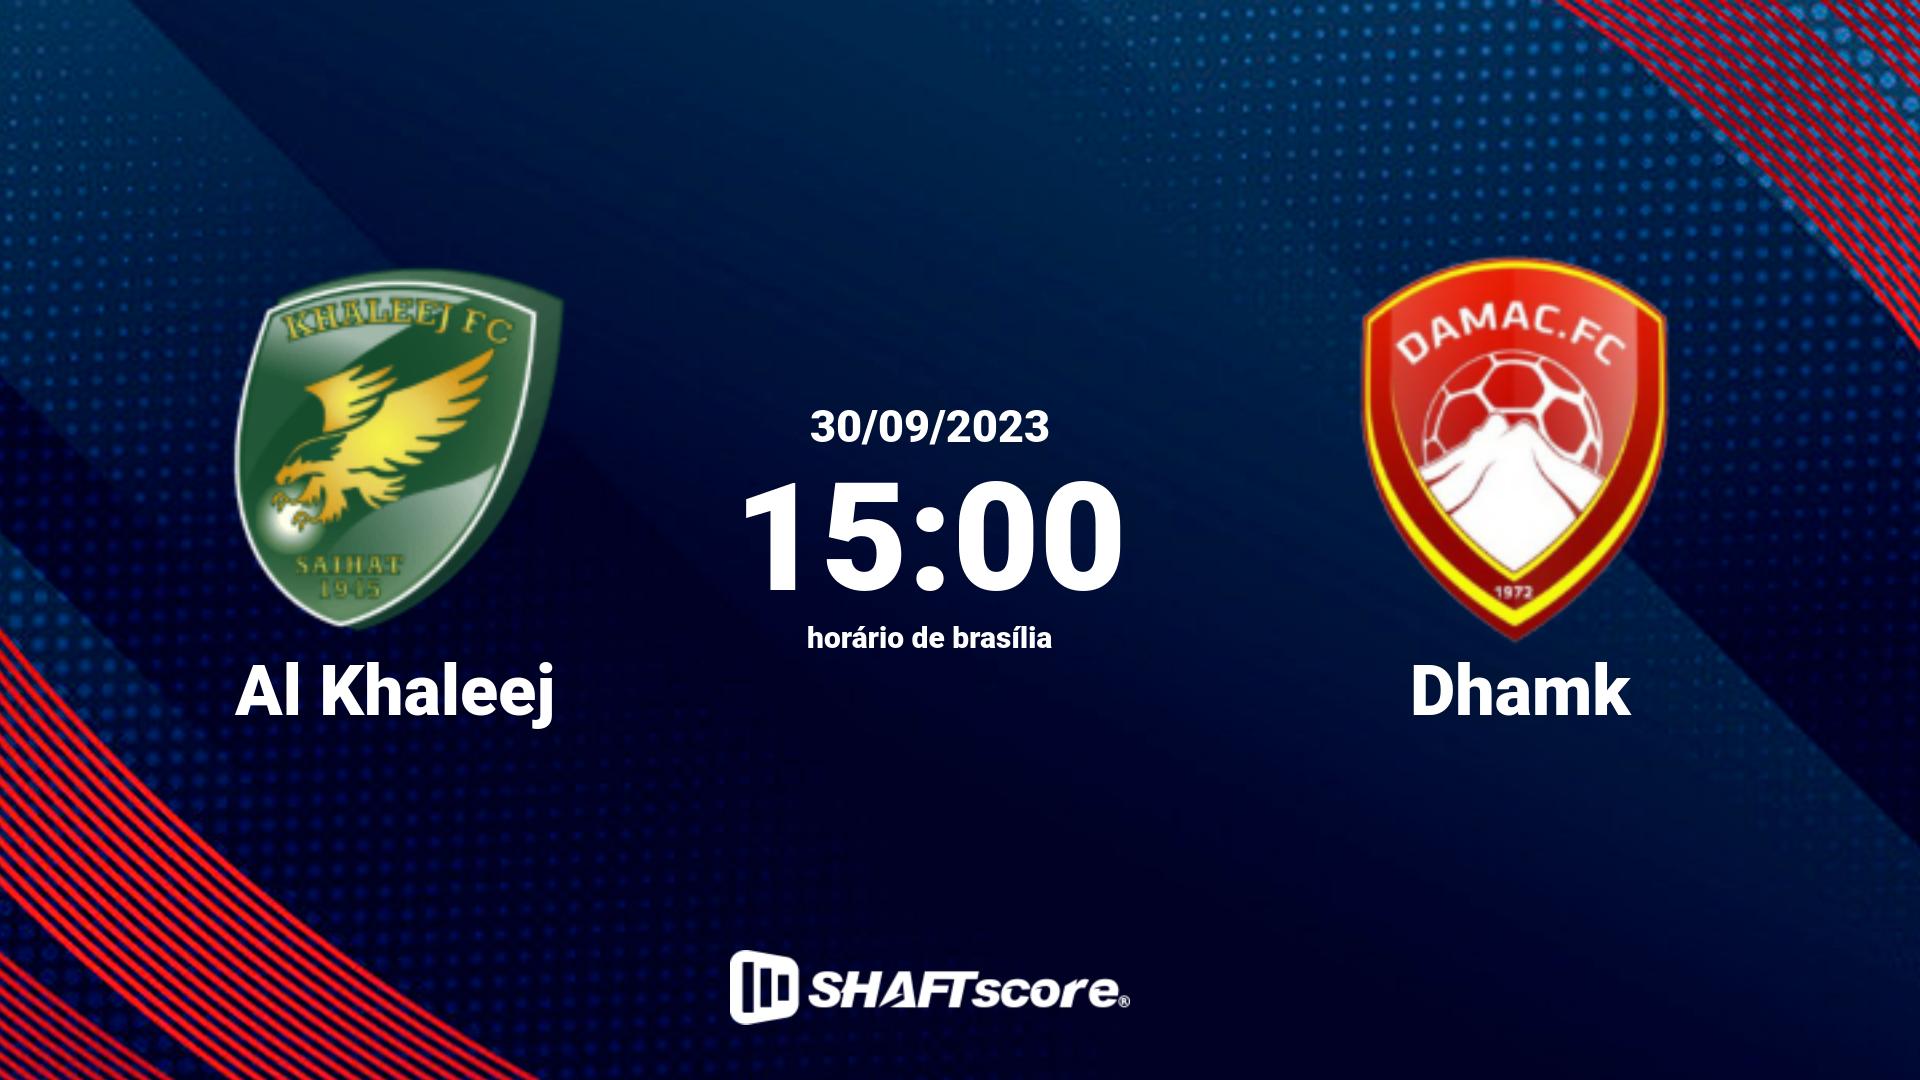 Estatísticas do jogo Al Khaleej vs Dhamk 30.09 15:00